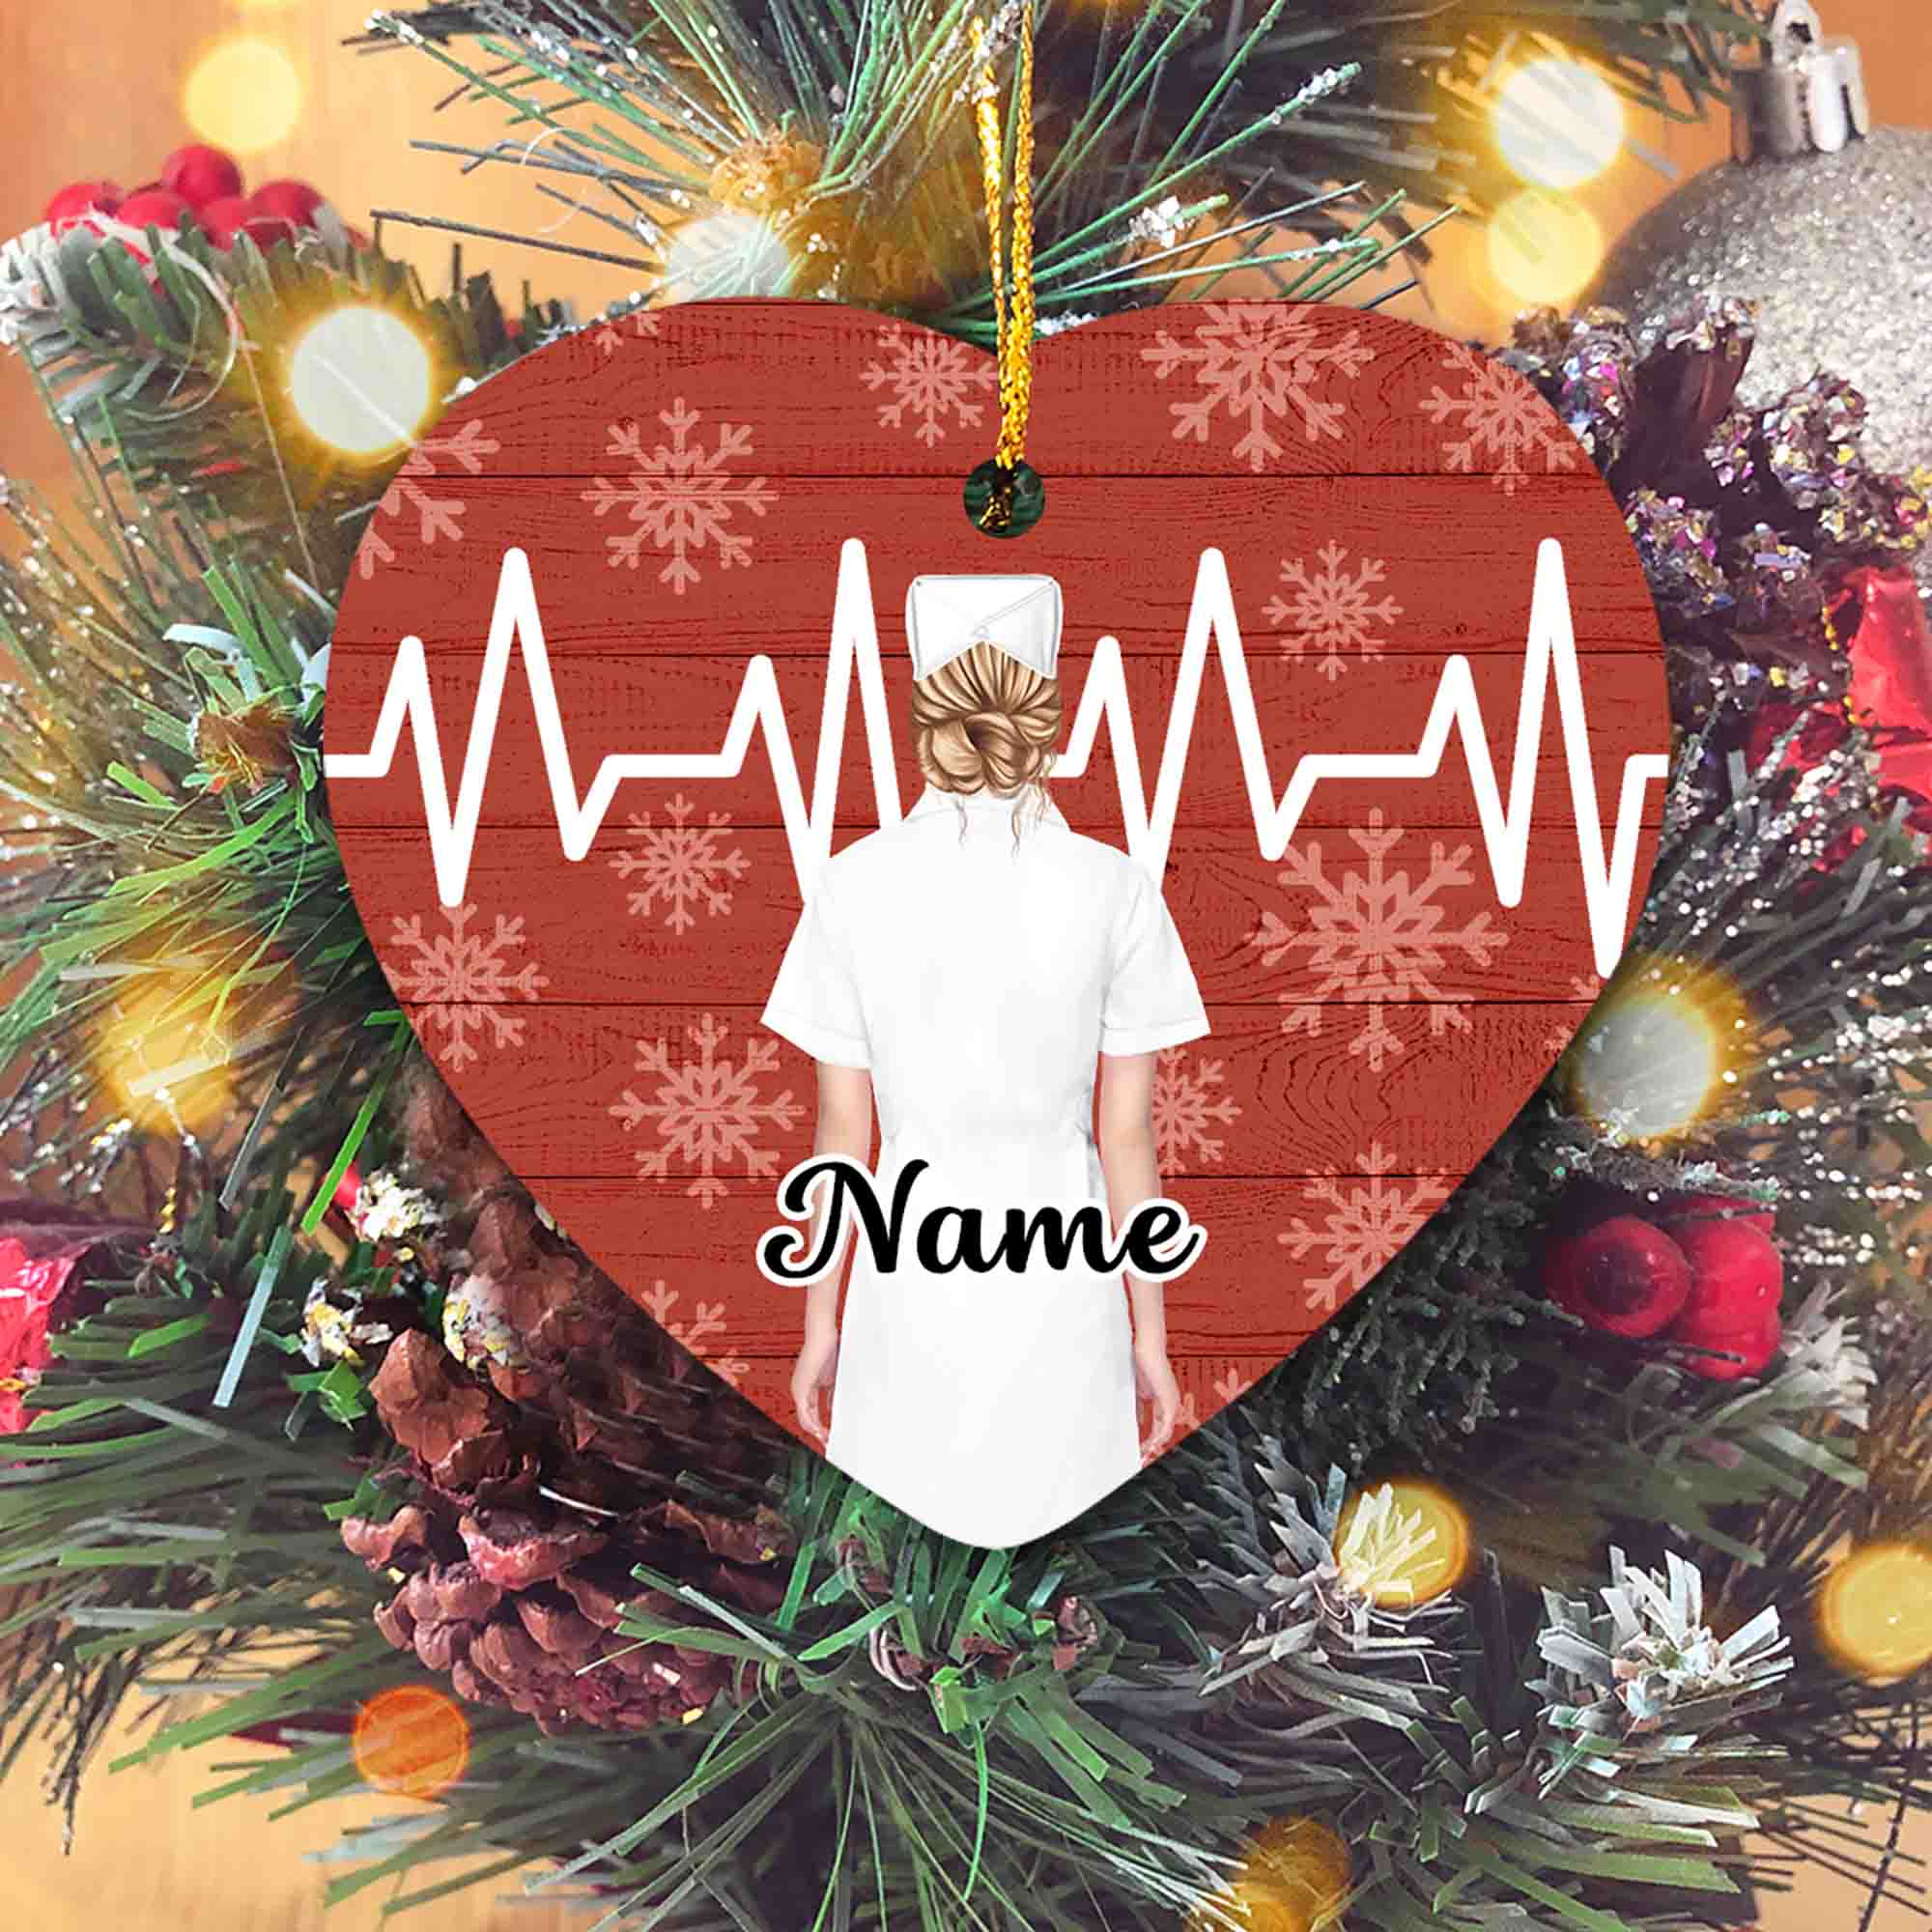 Personalized Nurse Ornament, Nurse Ornament, Nurse Christmas Ornament, Nursing Ornament, Custom Name Ornament, New Nurse Gift, Nurse Gift